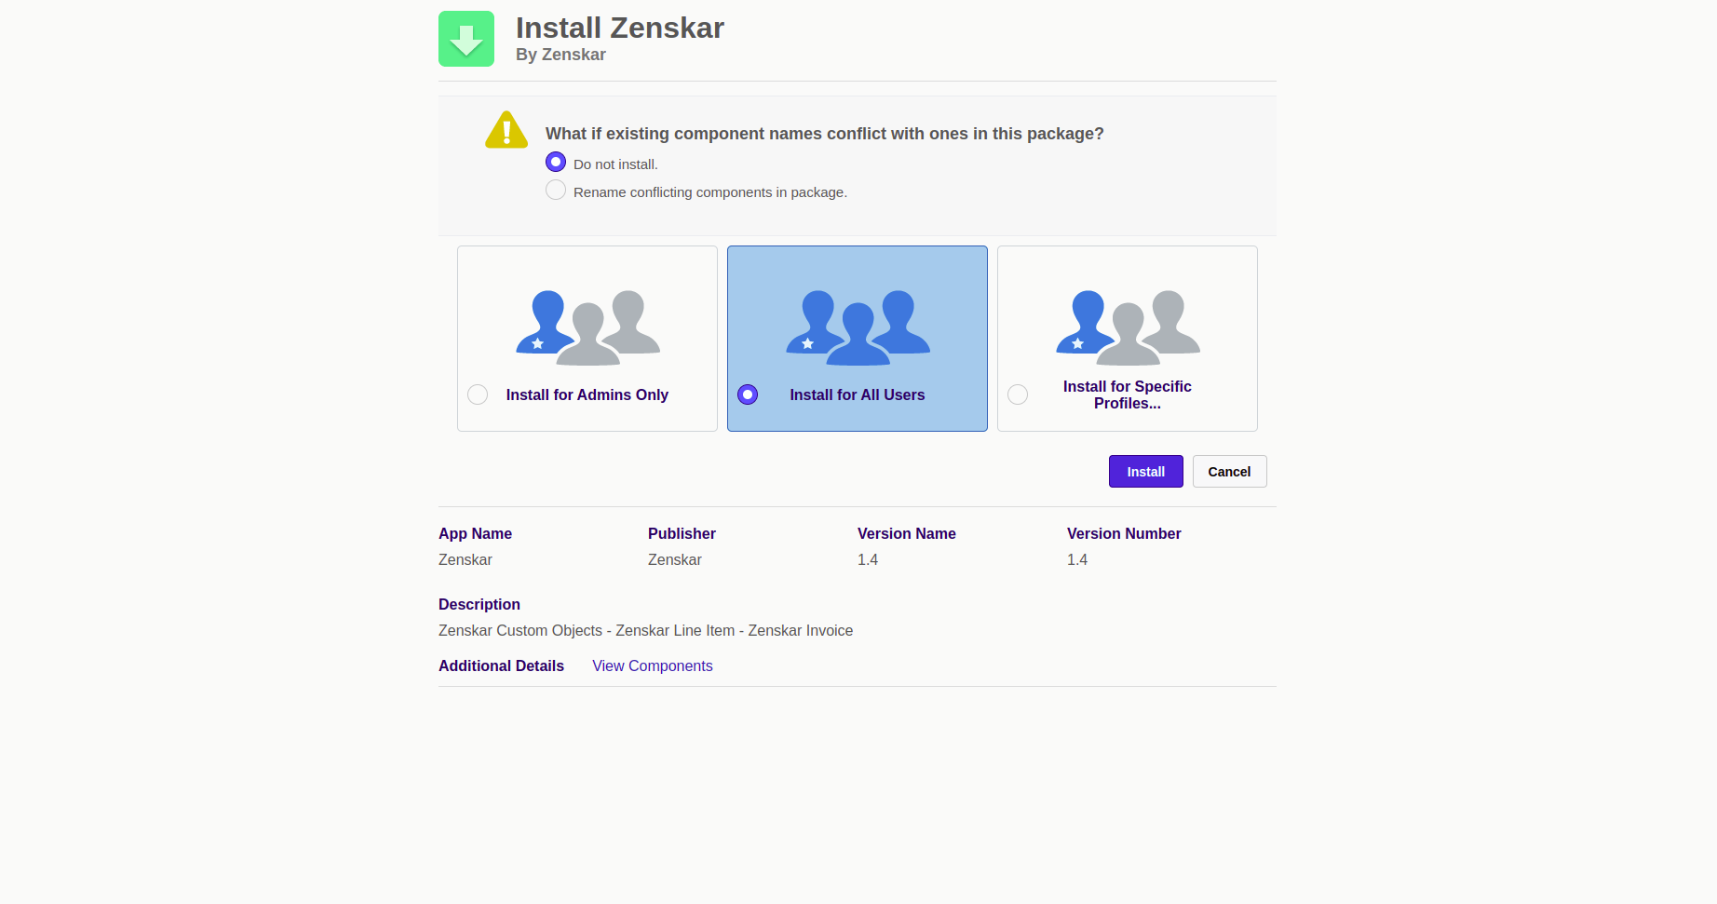 Fig. 1: Zenskar package for Salesforce: install options